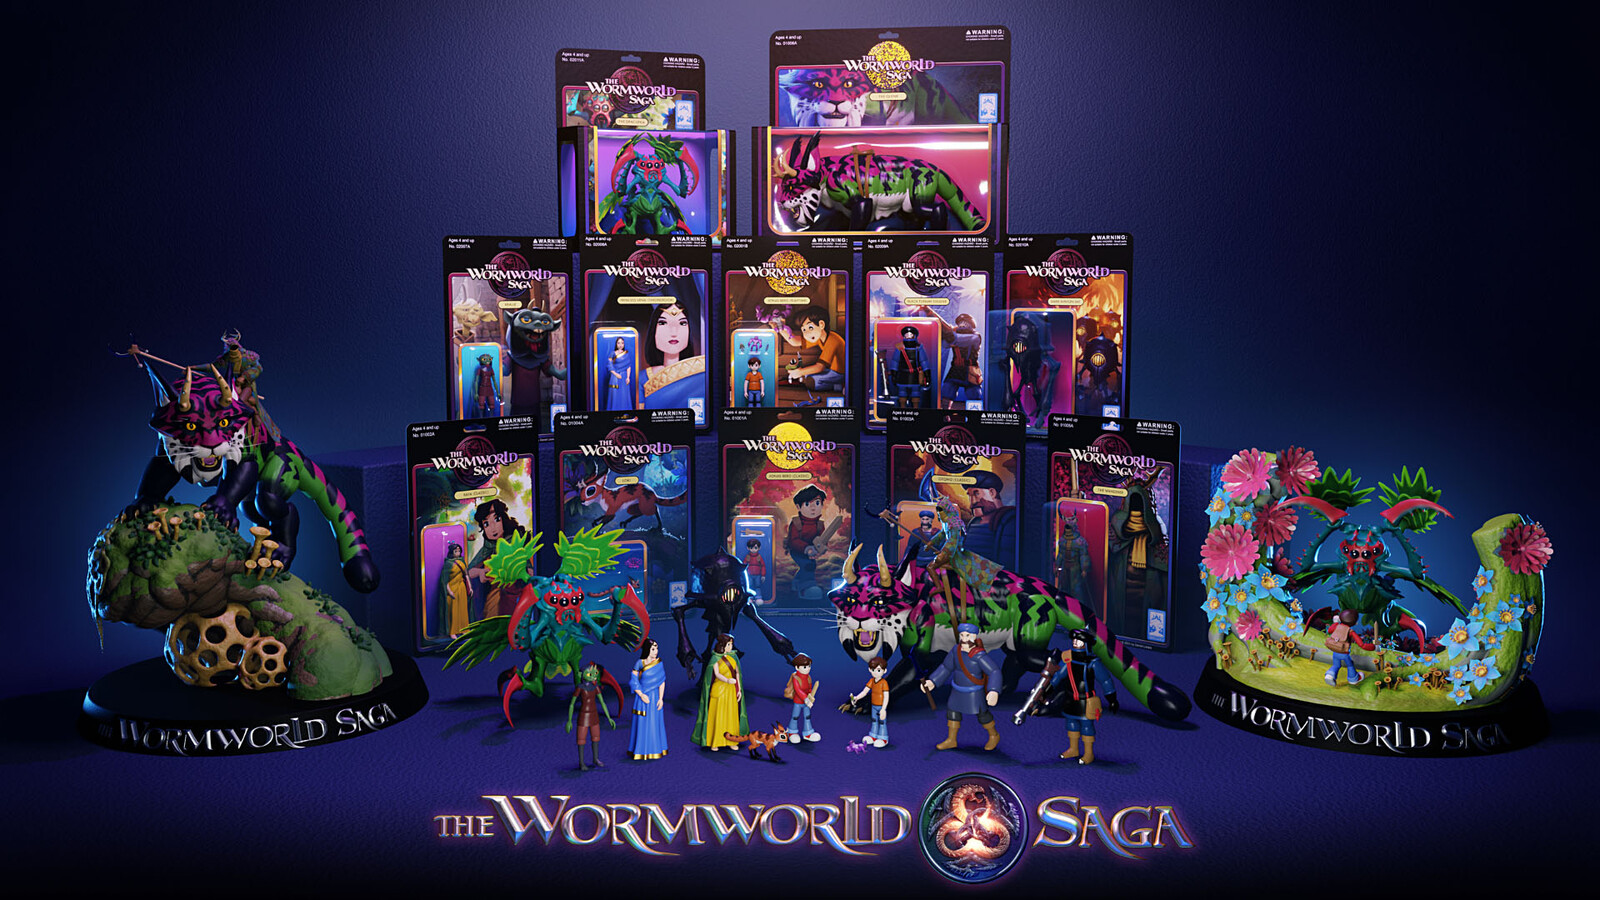 The Wormworld Saga Digital Action Figures